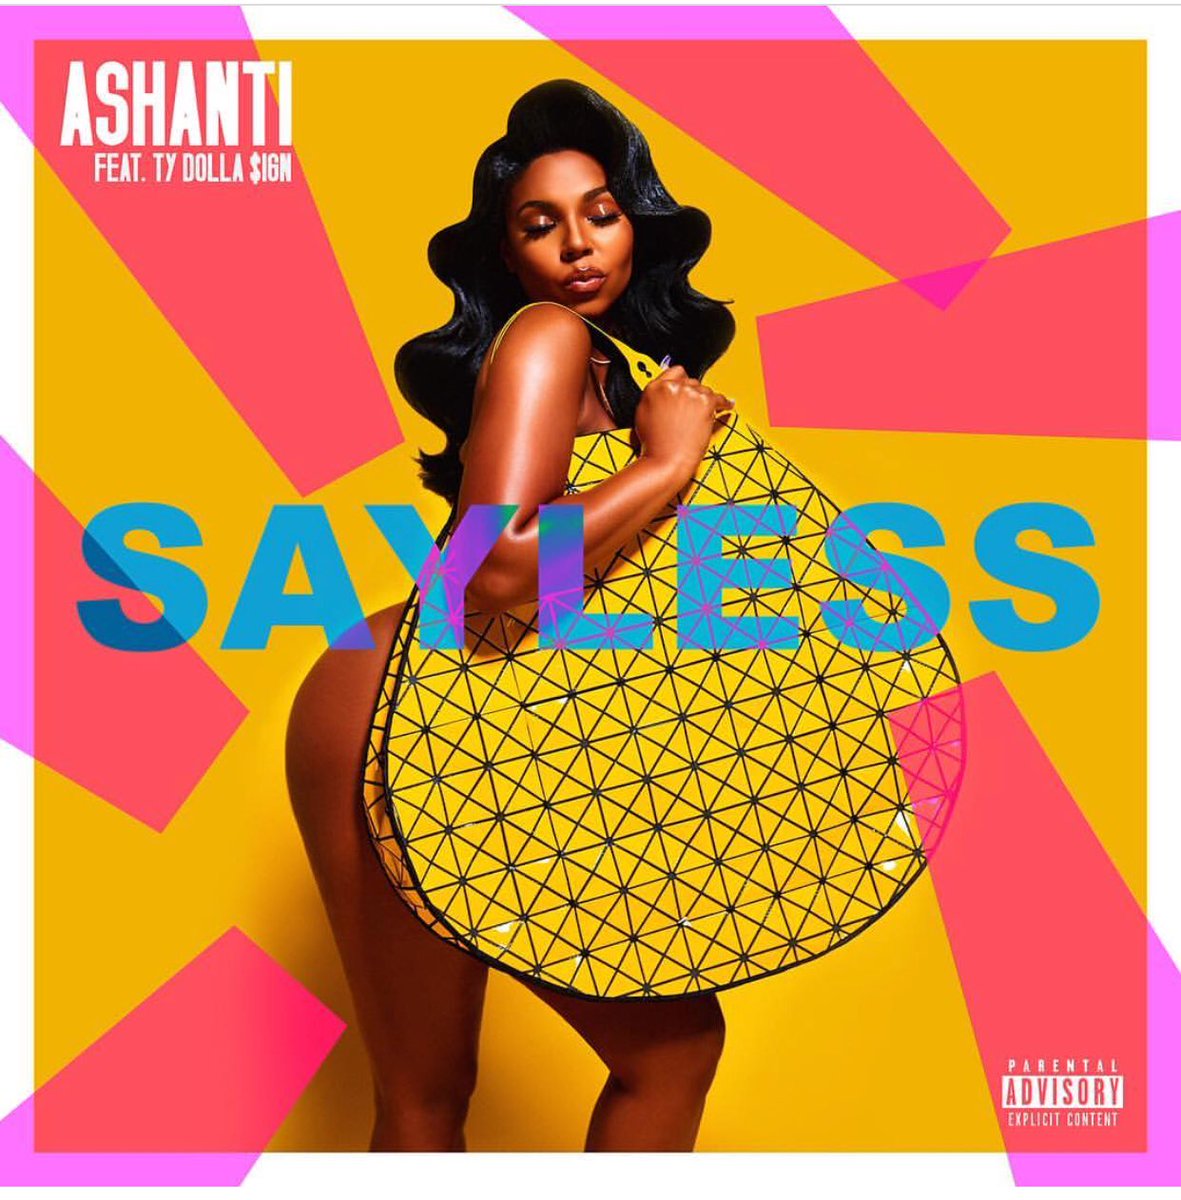 RT @TRINArockstarr: Get my girl @ashanti’s new single #Sayless w/ @tydollasign out now ???????????? https://t.co/BJOCHYDQCU https://t.co/1MvLoleRum